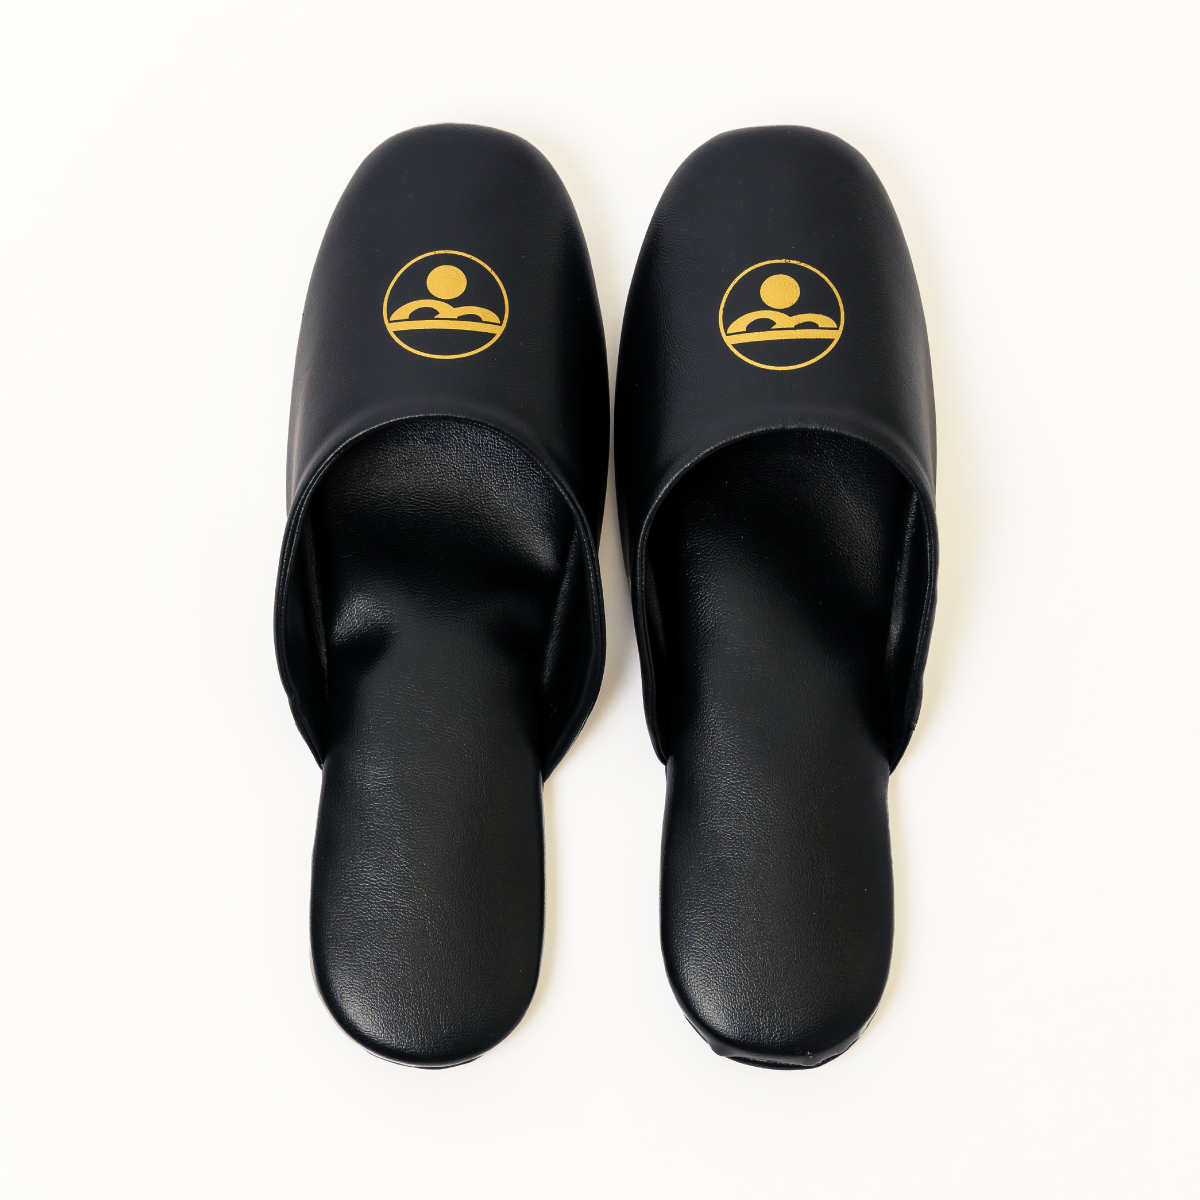 Chillax logo slippers